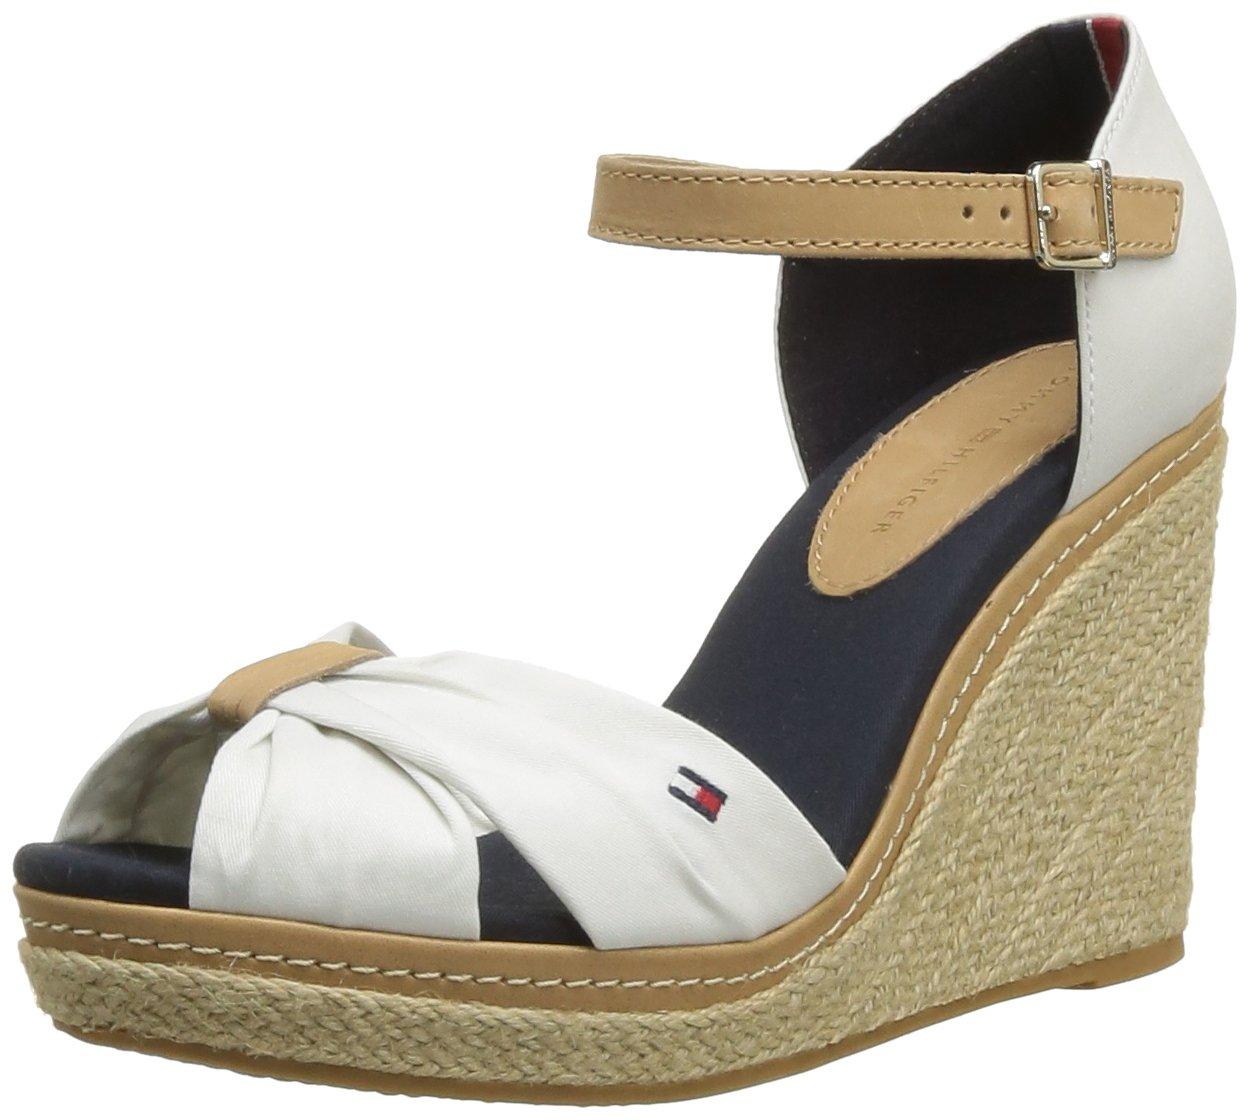 Tommy Hilfiger S Emery Fashion Sandals Fw56816770 White 6.5 Uk Lyst UK